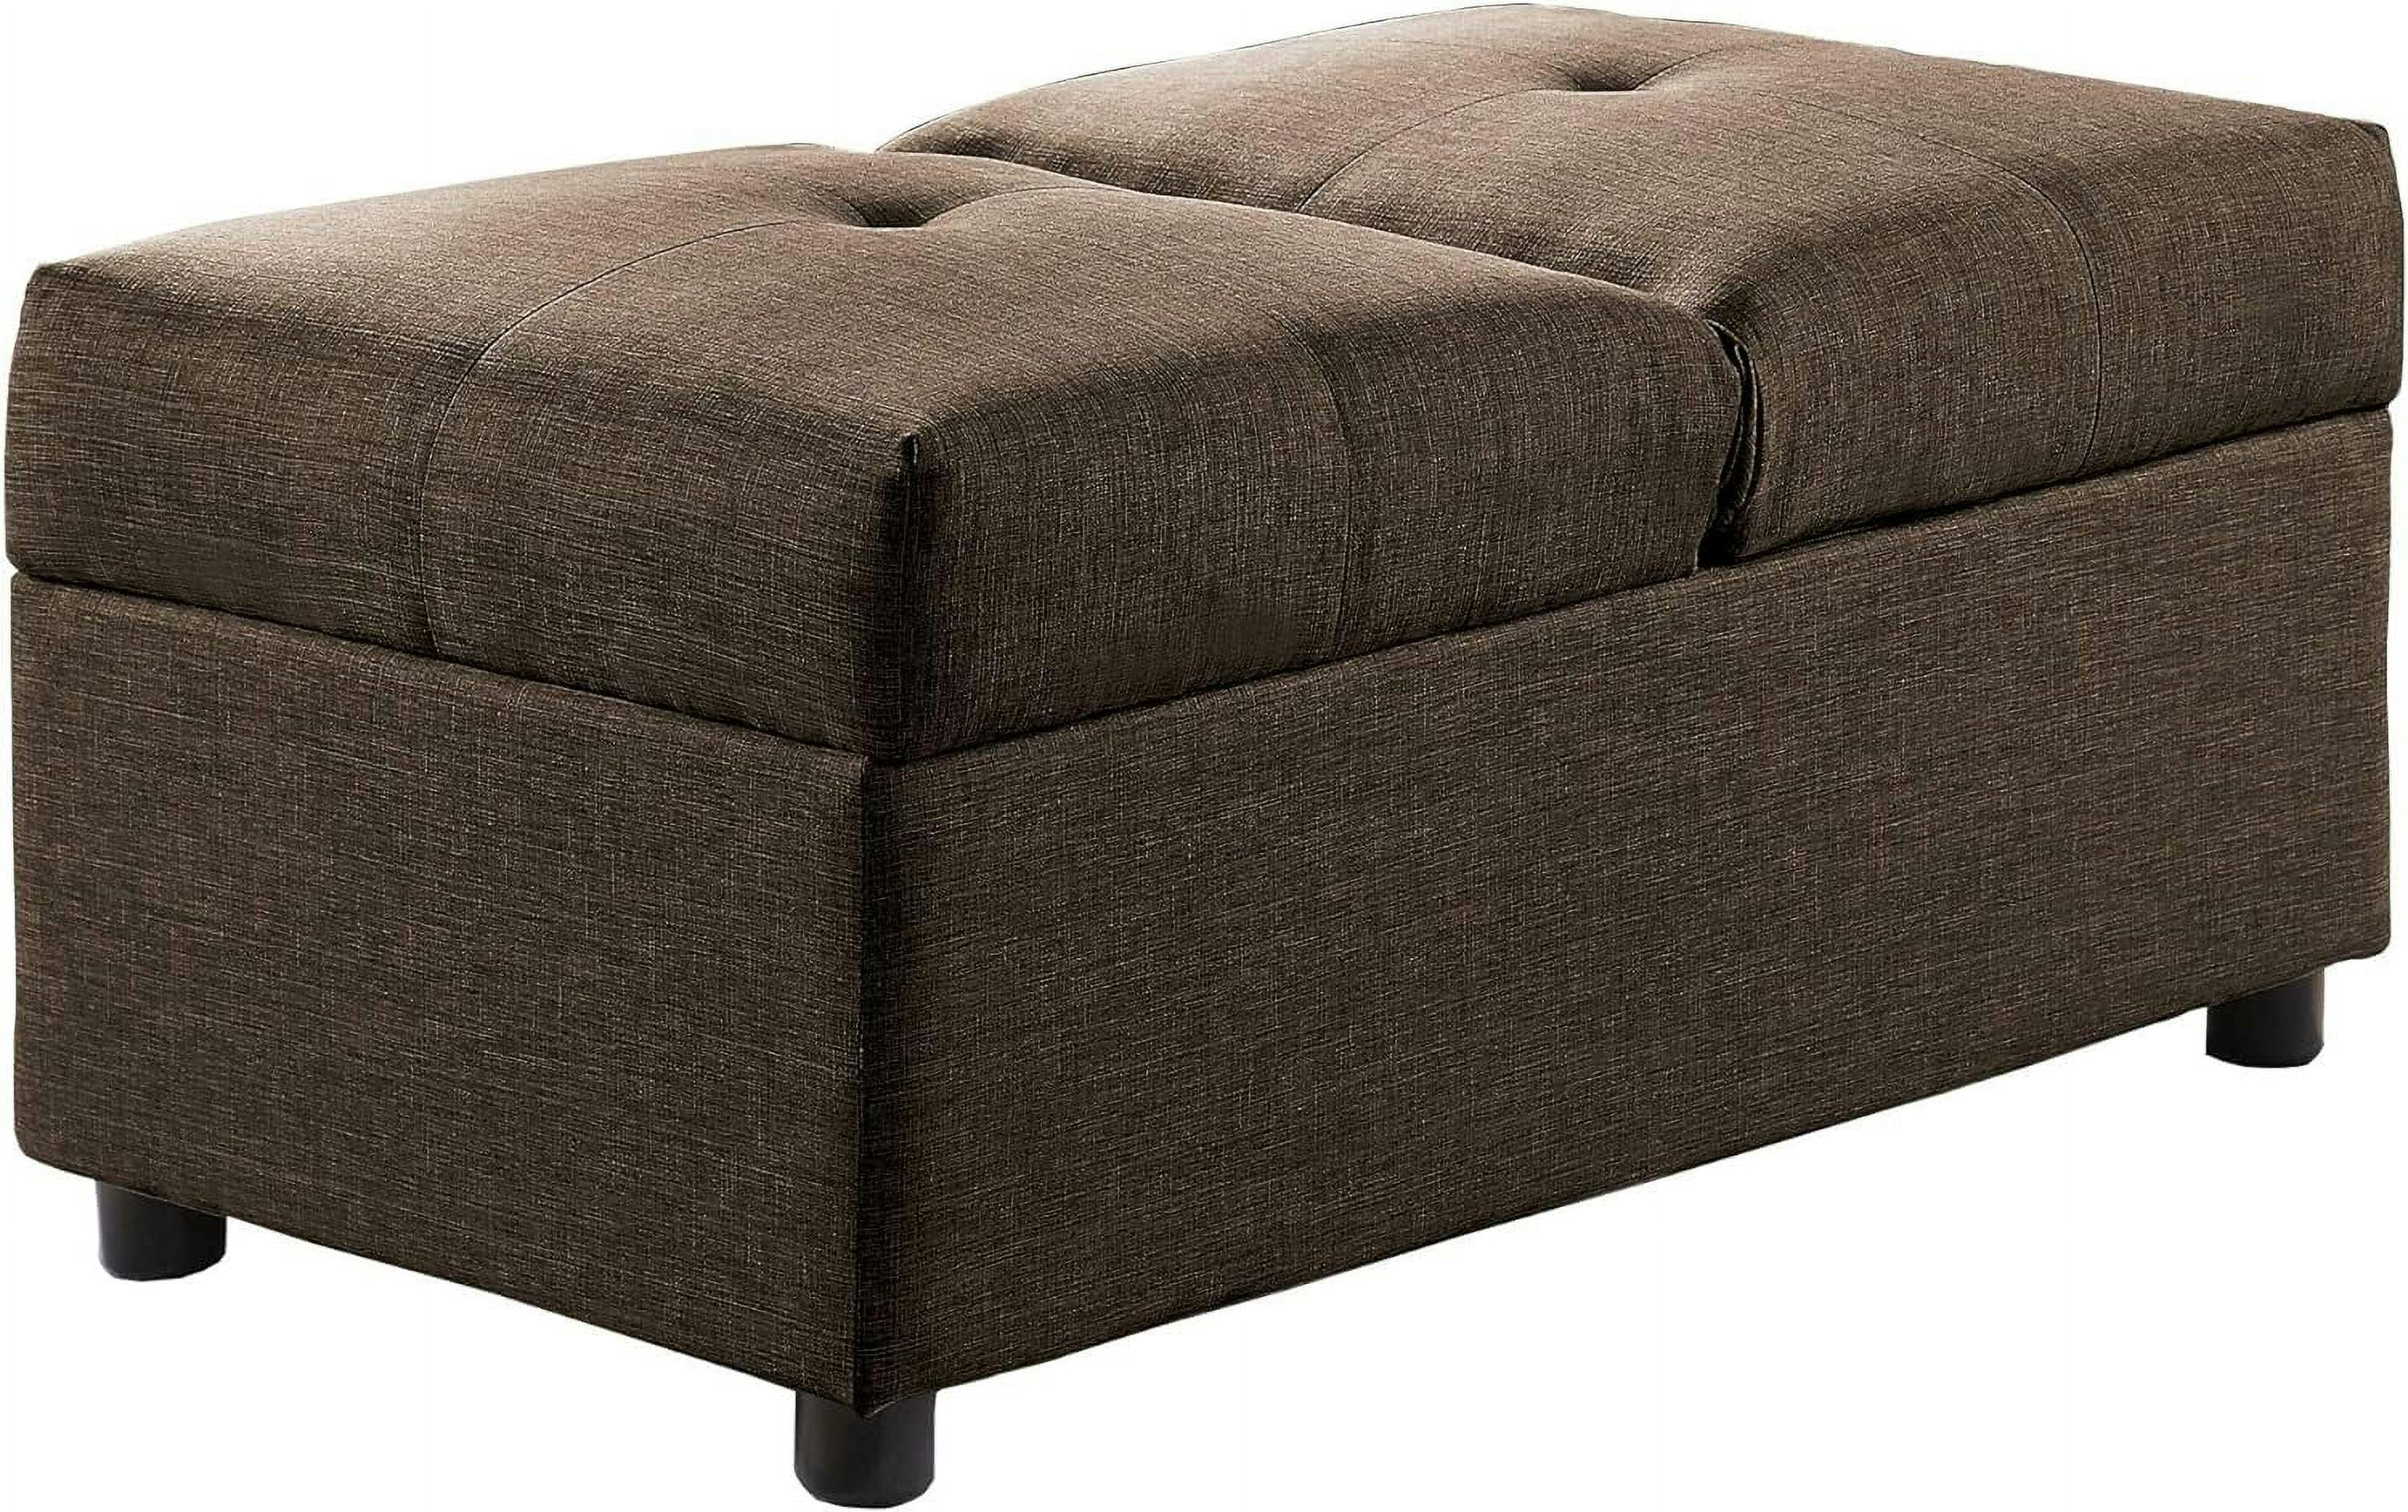 Destry Modern Brown Tufted Convertible Storage Ottoman Chair